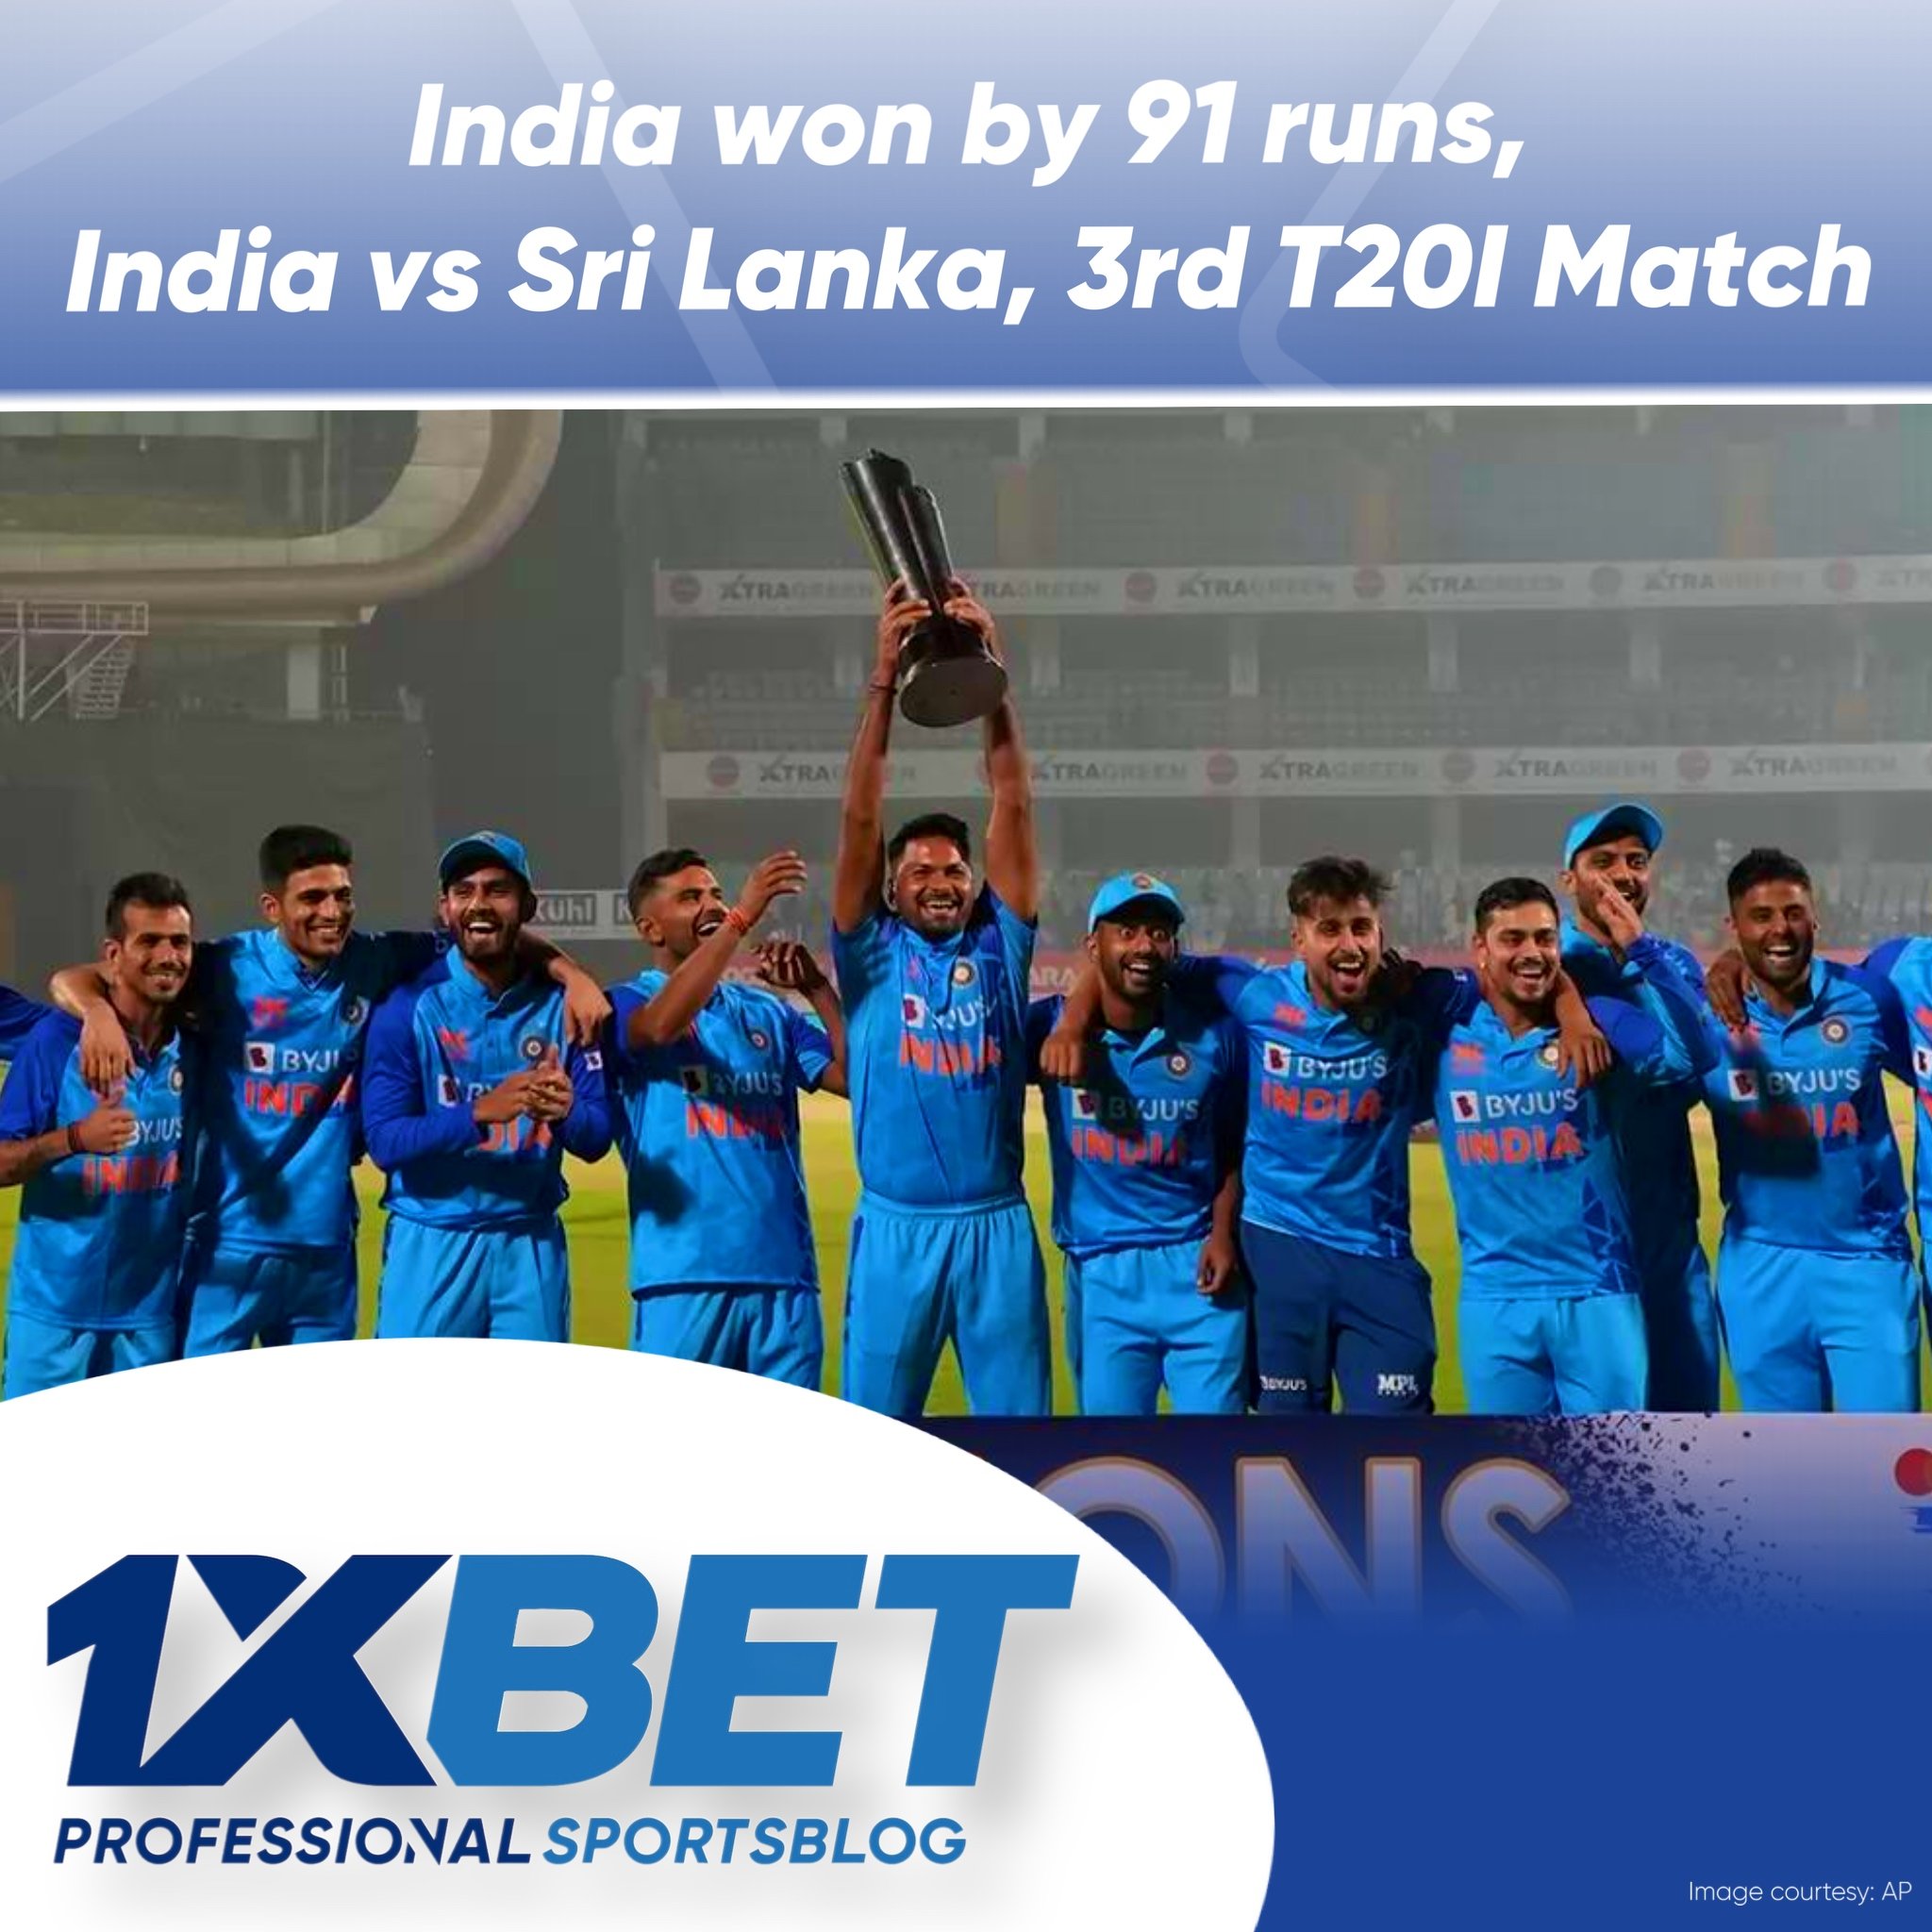 India won by 91 runs